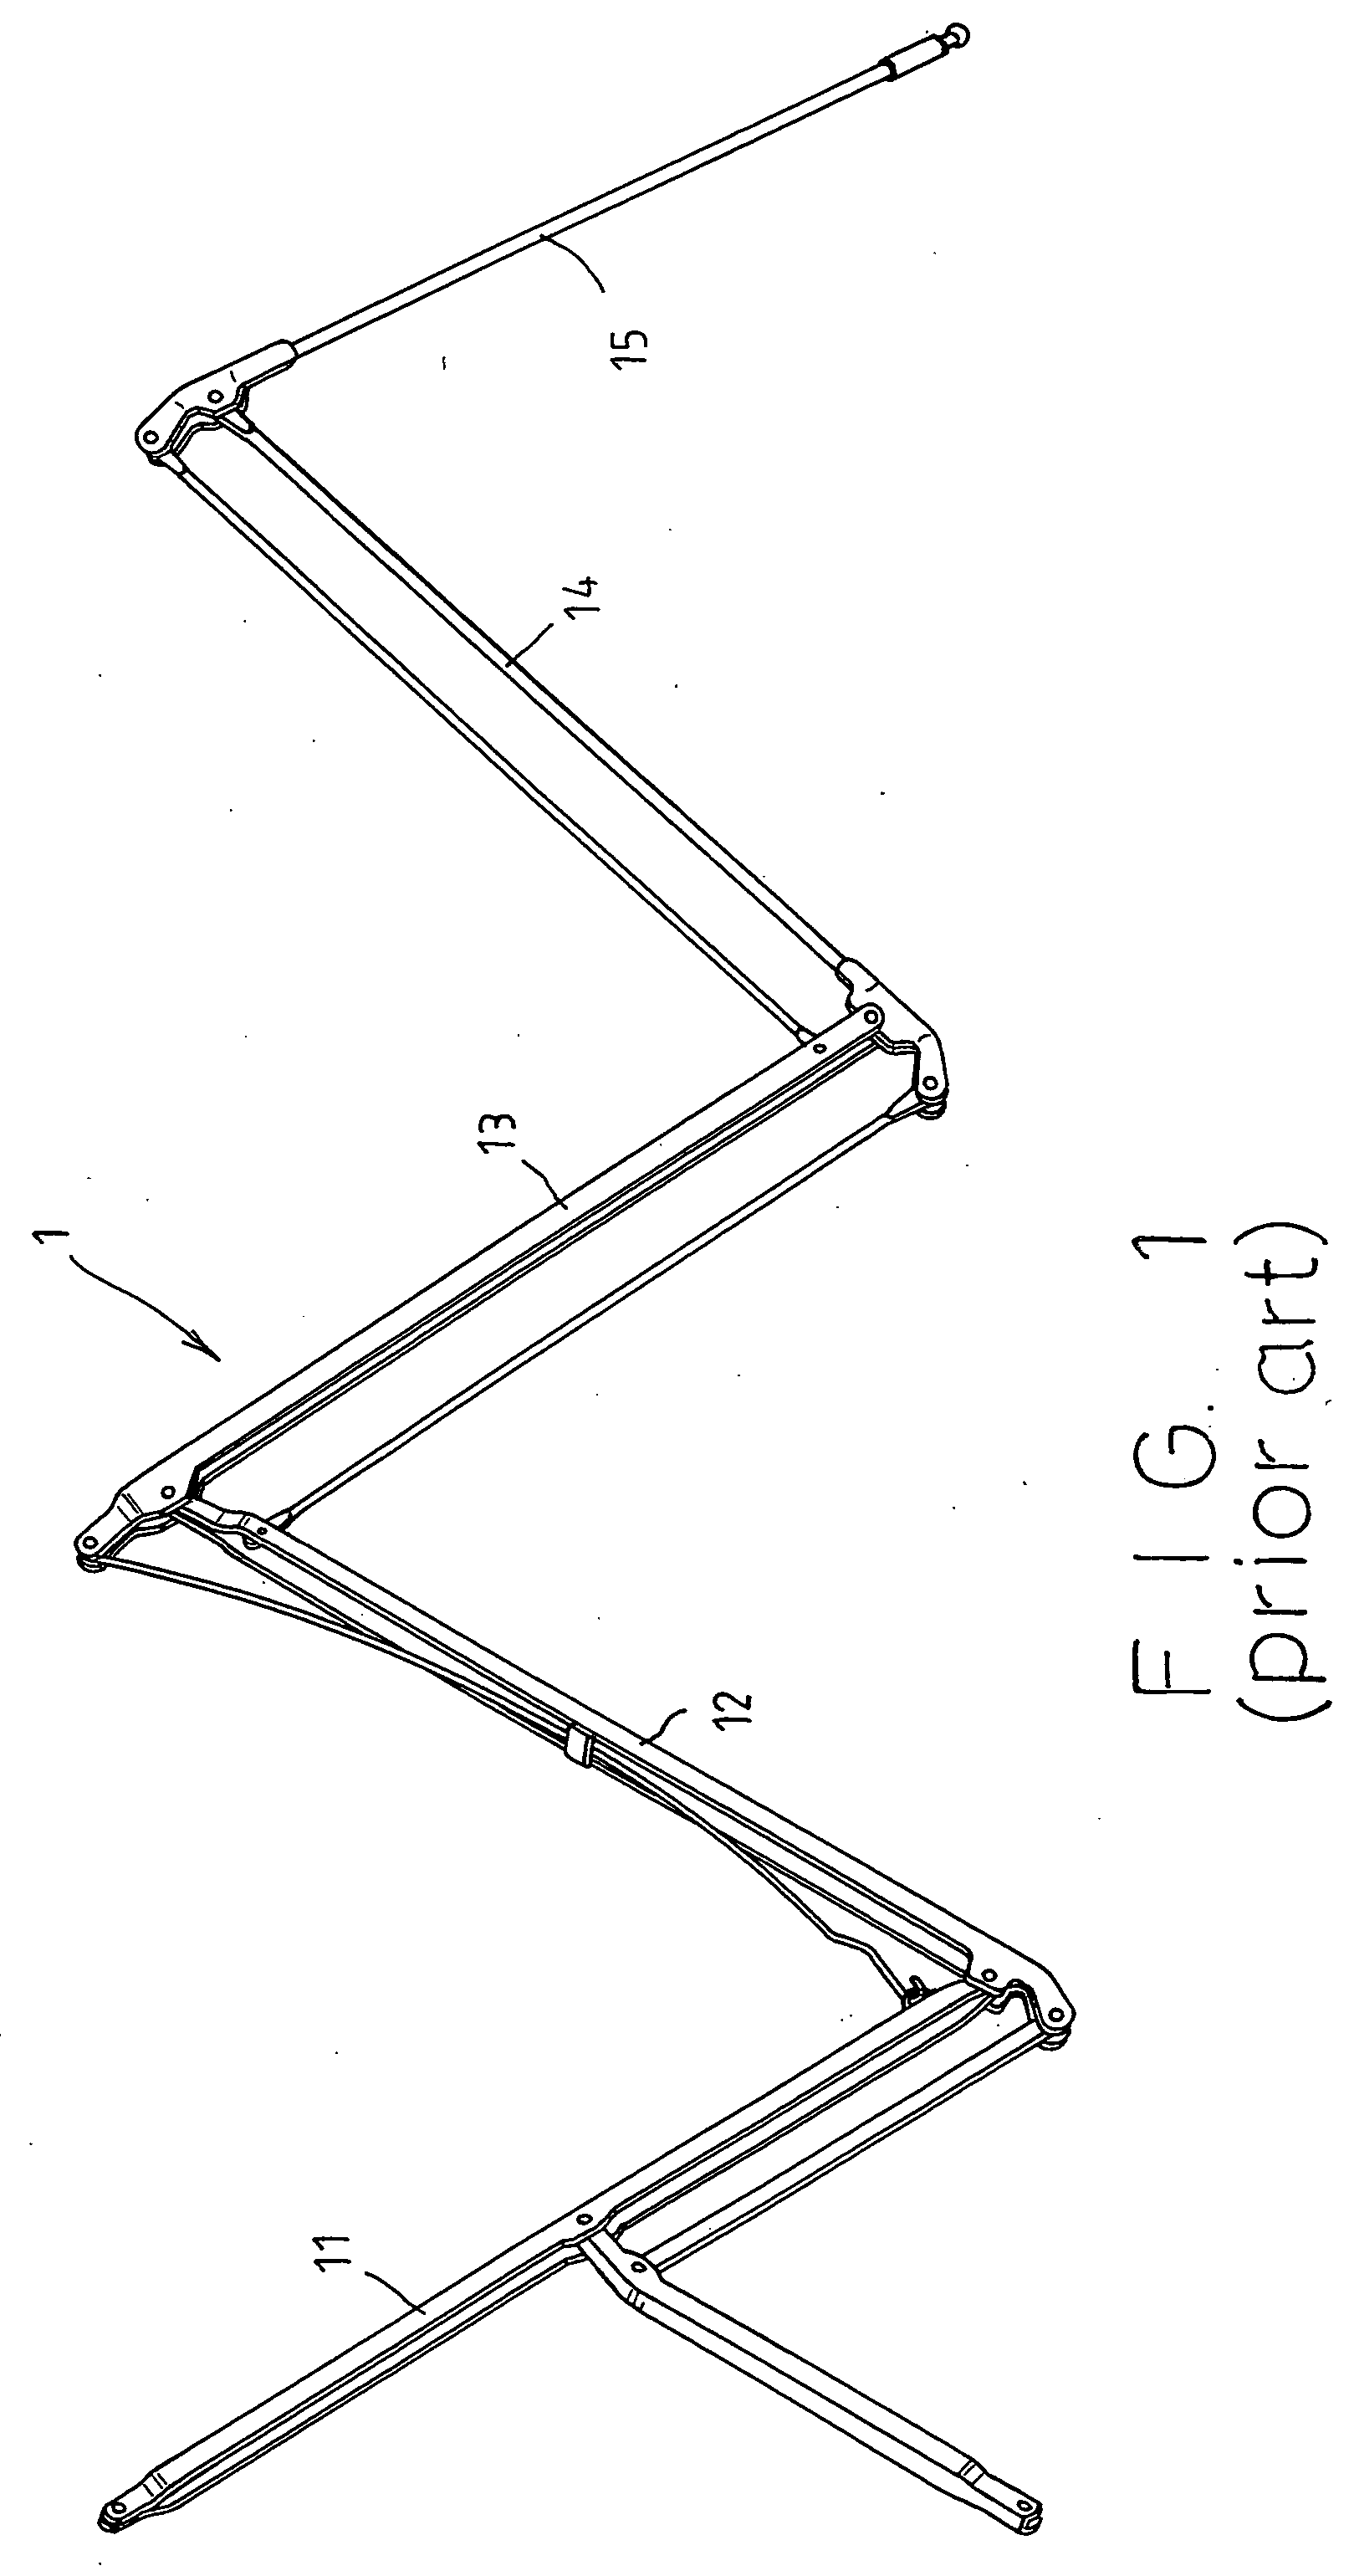 Foldable umbrella frame having five ribs (III)